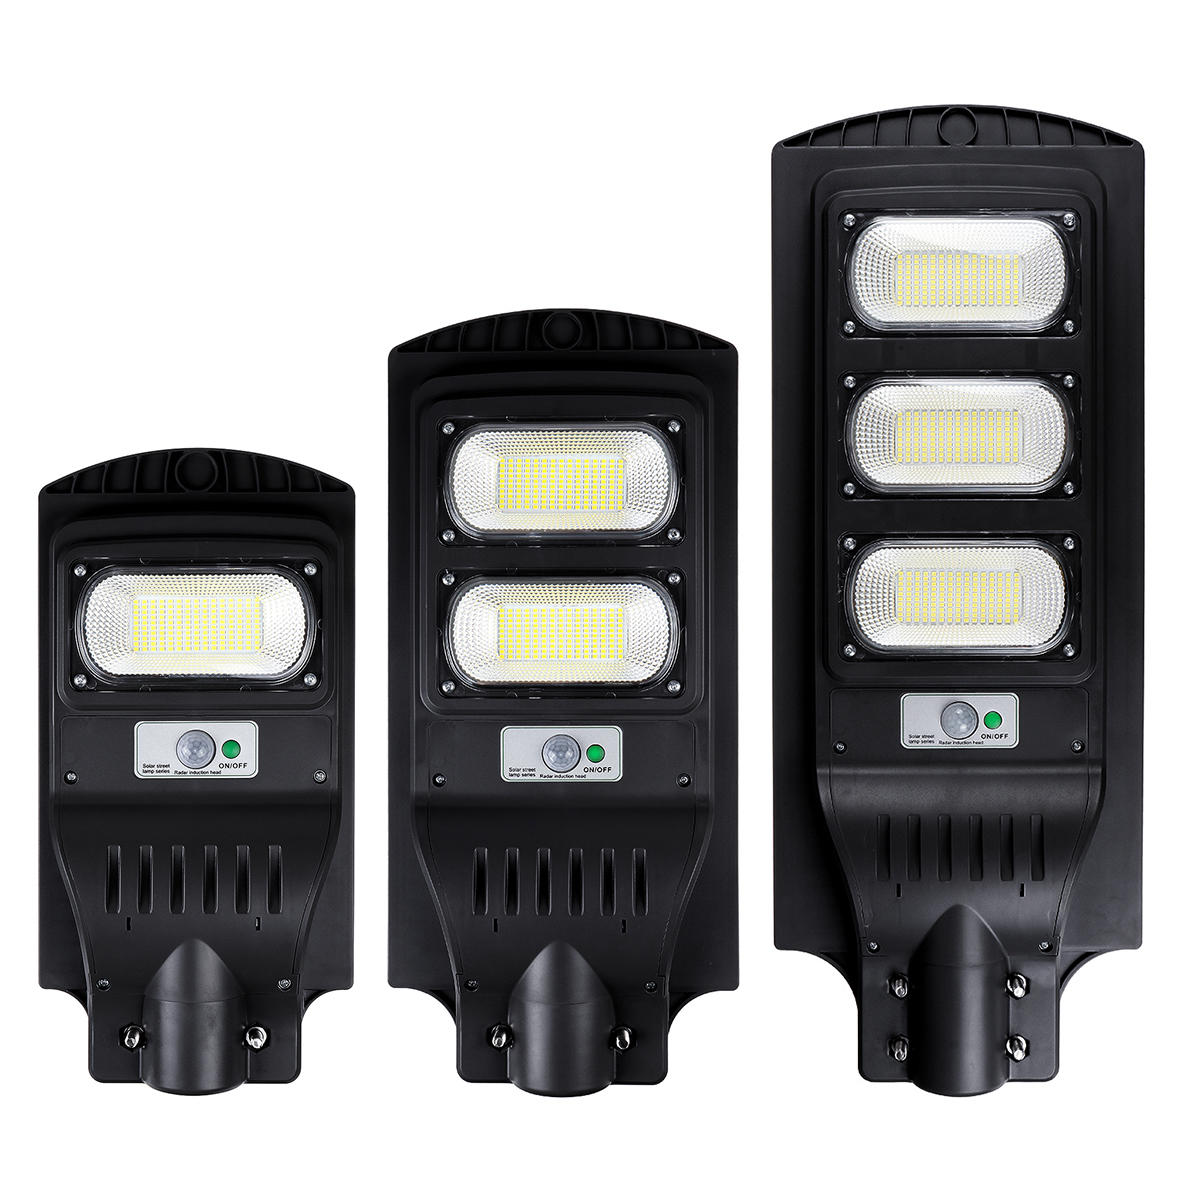 300/600/900W 150/300/450 LED Solar Street Light PIR Motion Sensor Outdoor Wall Lamp+Remote